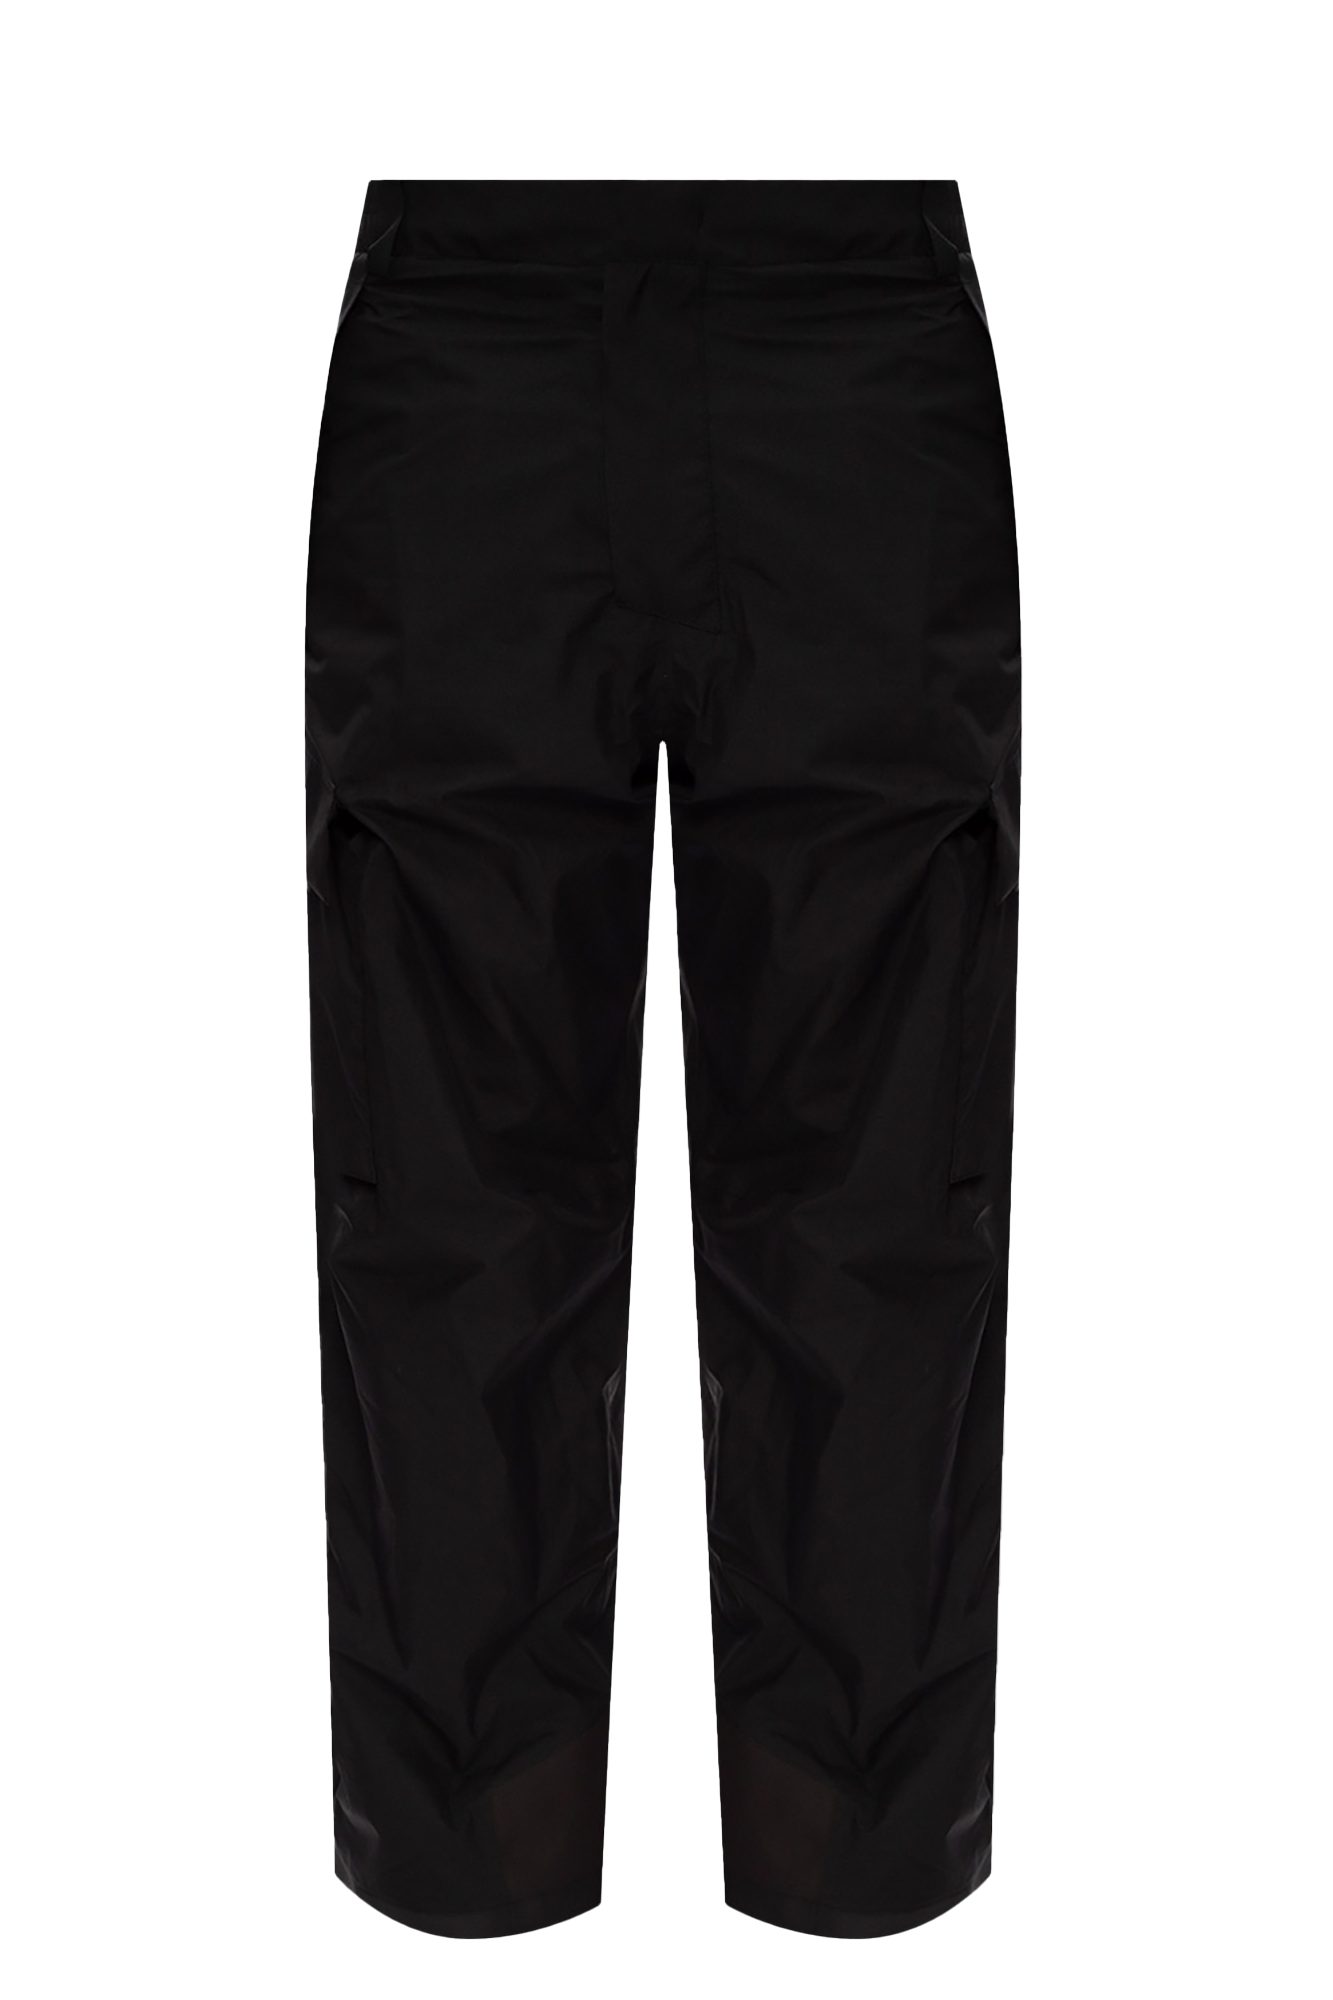 High-rise ski pants in black - Moncler Grenoble